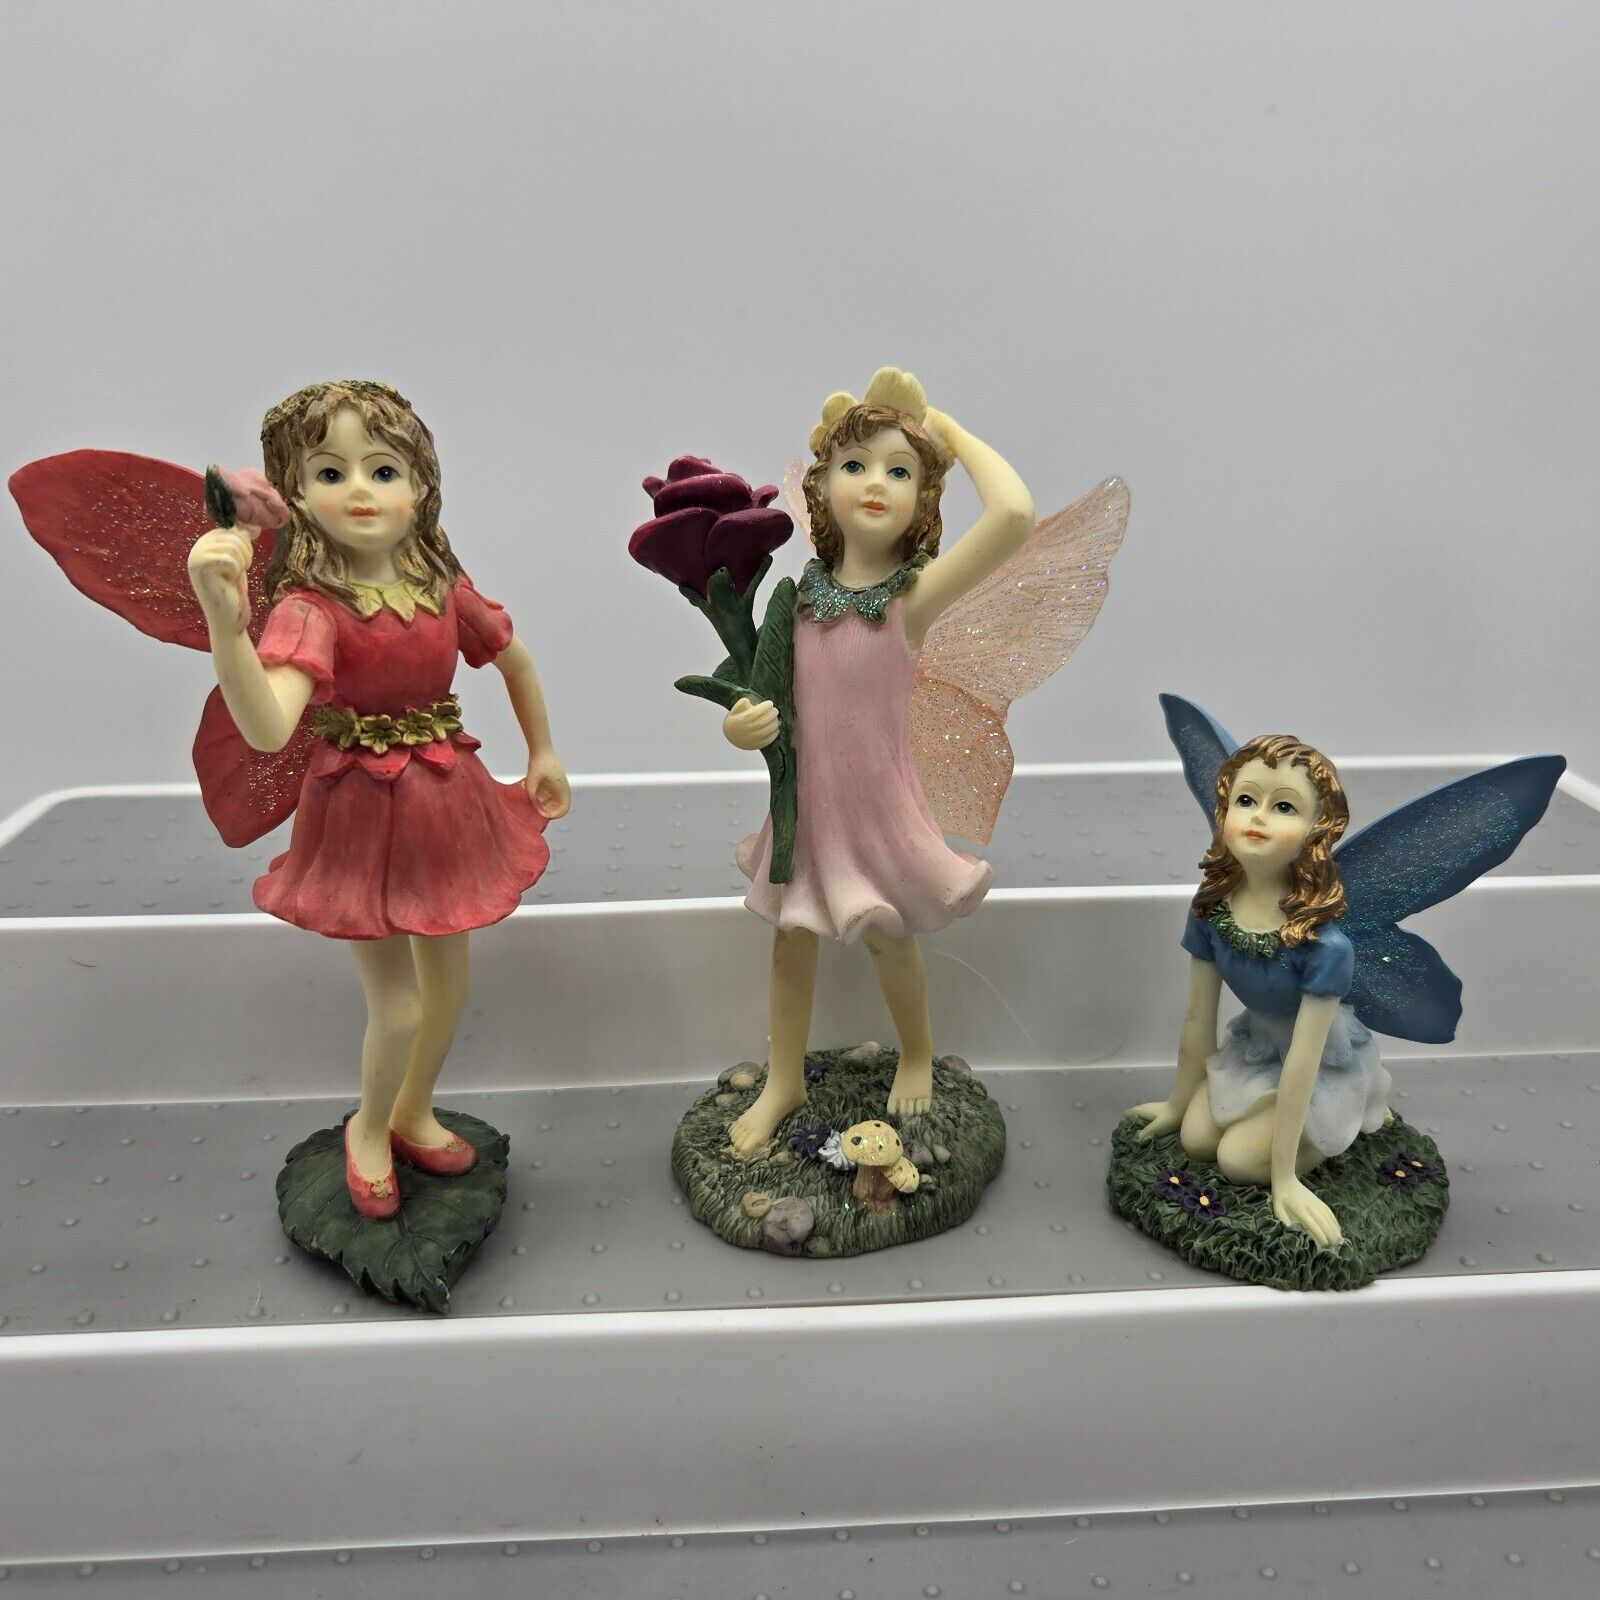 The Fairy Collection by Dezine Graceful Fairy Sky Fairy Rosemary Fairy Lot of 3